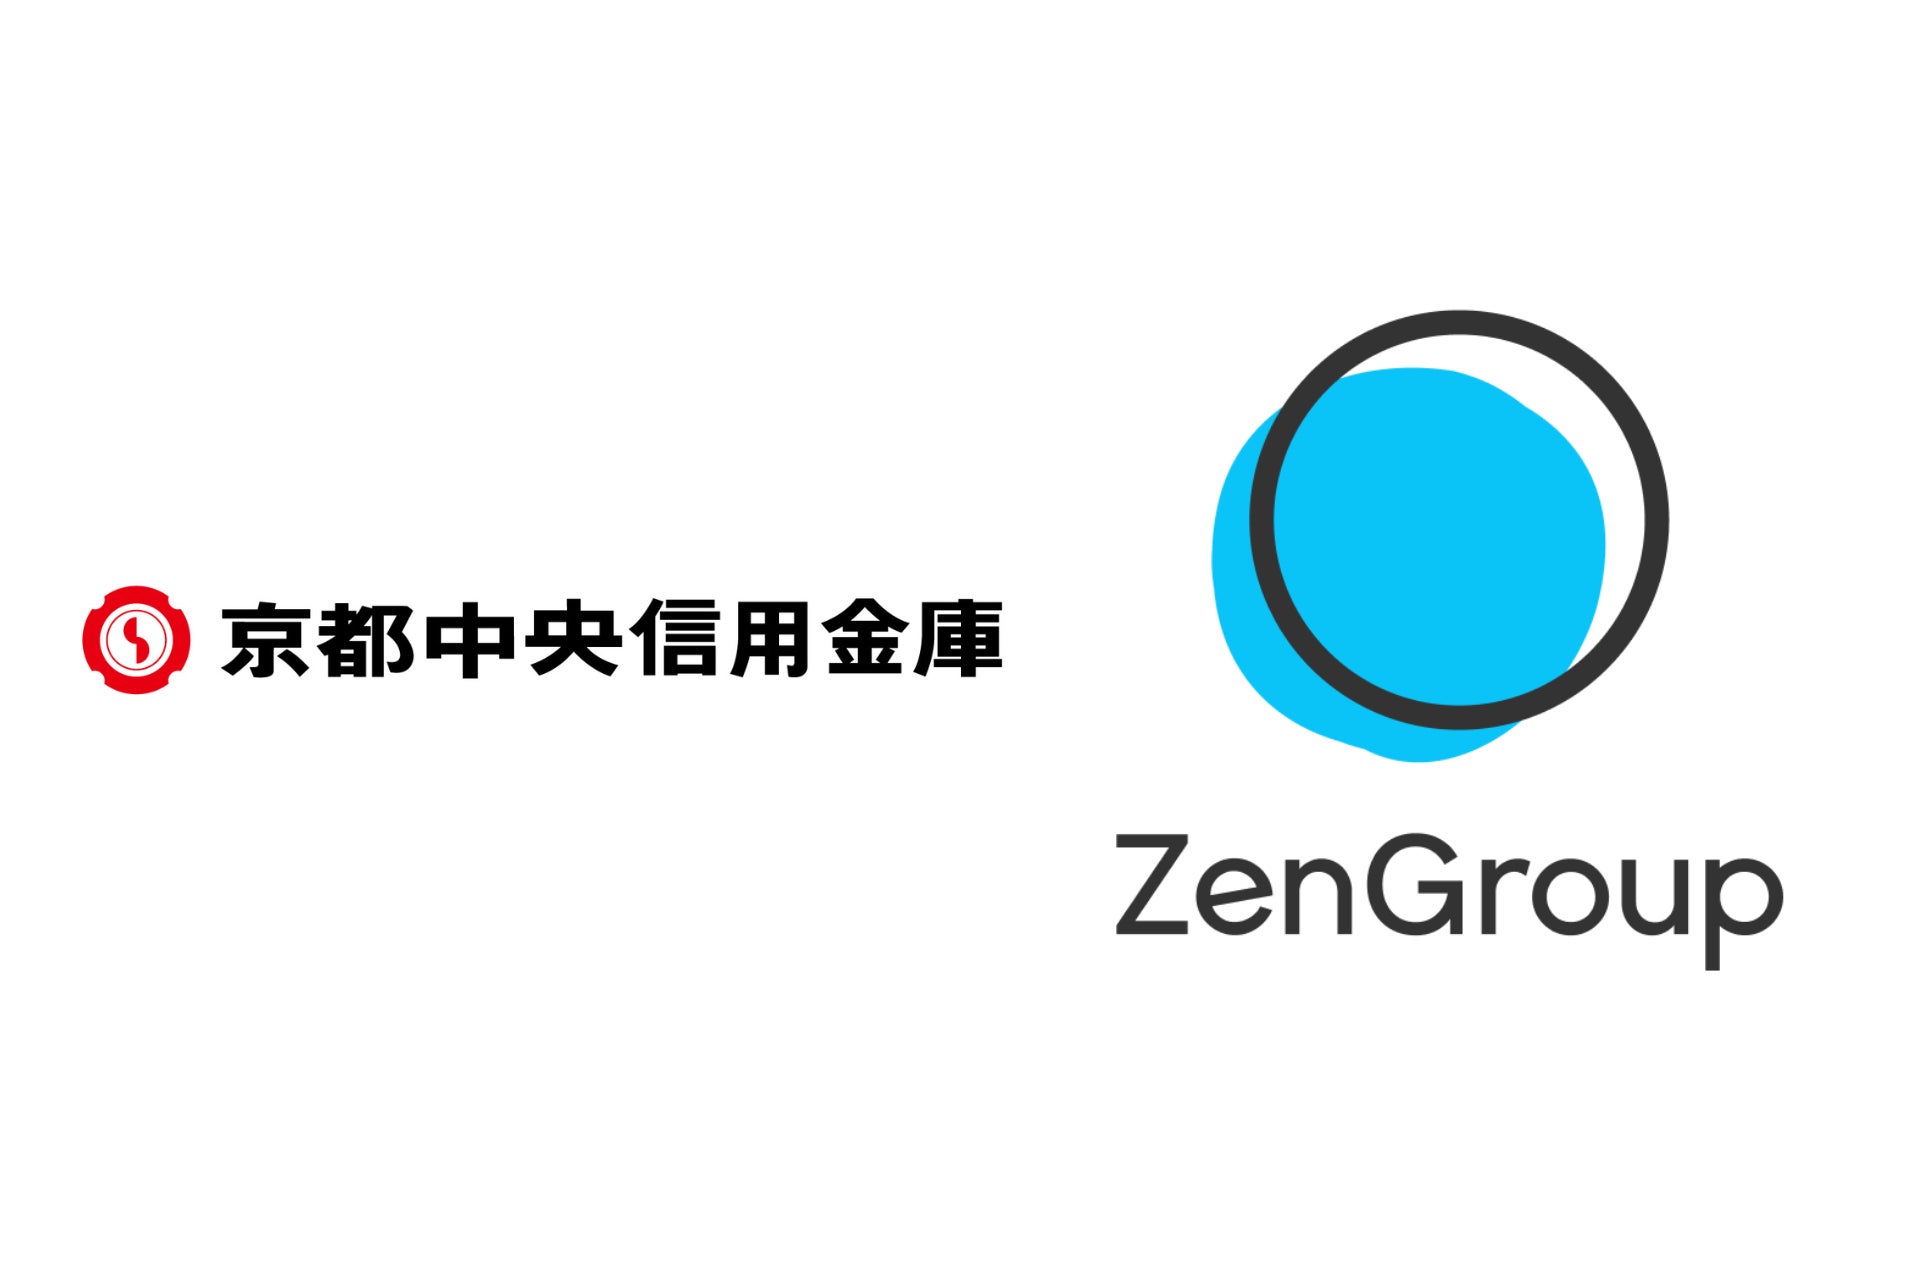 ZenGroup株式会社、京都中央信用金庫と業務提携